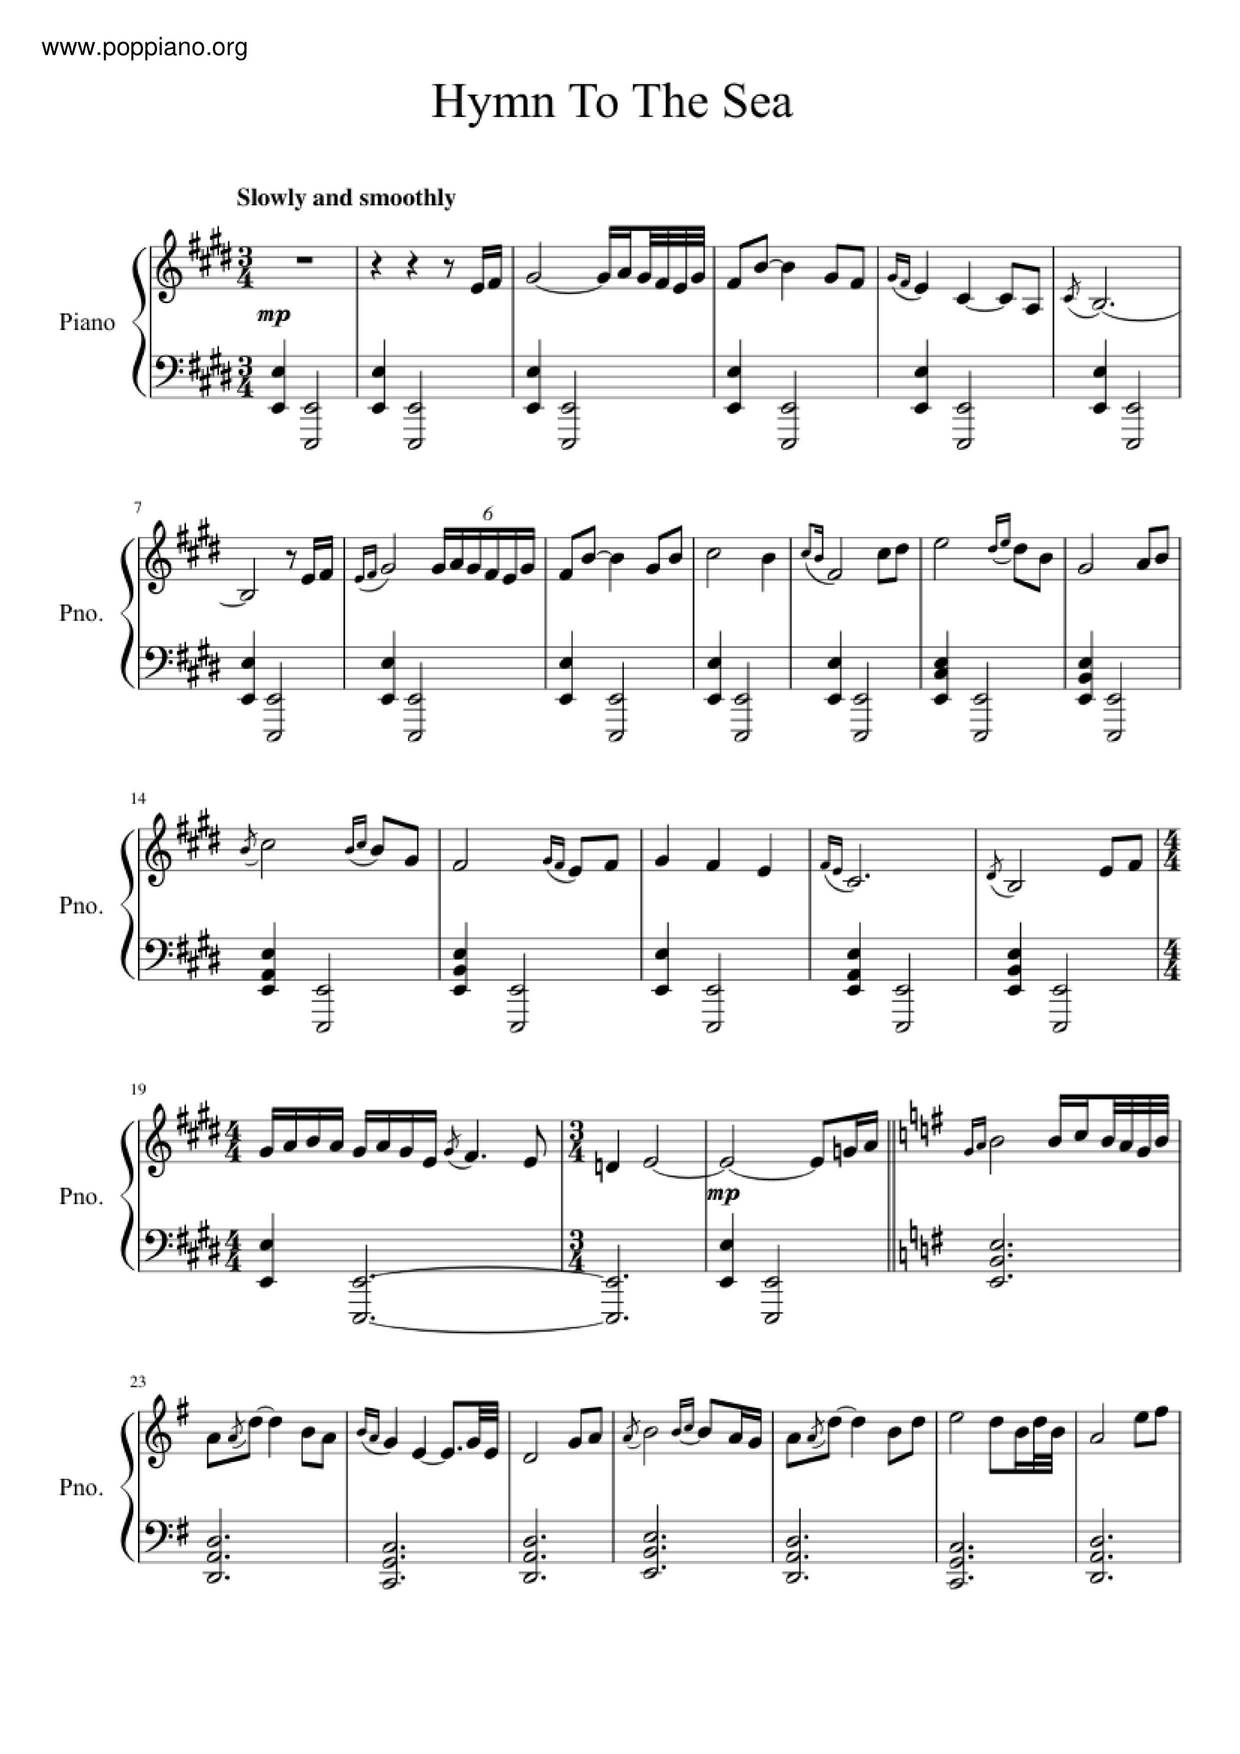 ☆ Titanic - Hymn To The Sea | Sheet Music | Piano Score Free PDF Download |  HK Pop Piano Academy